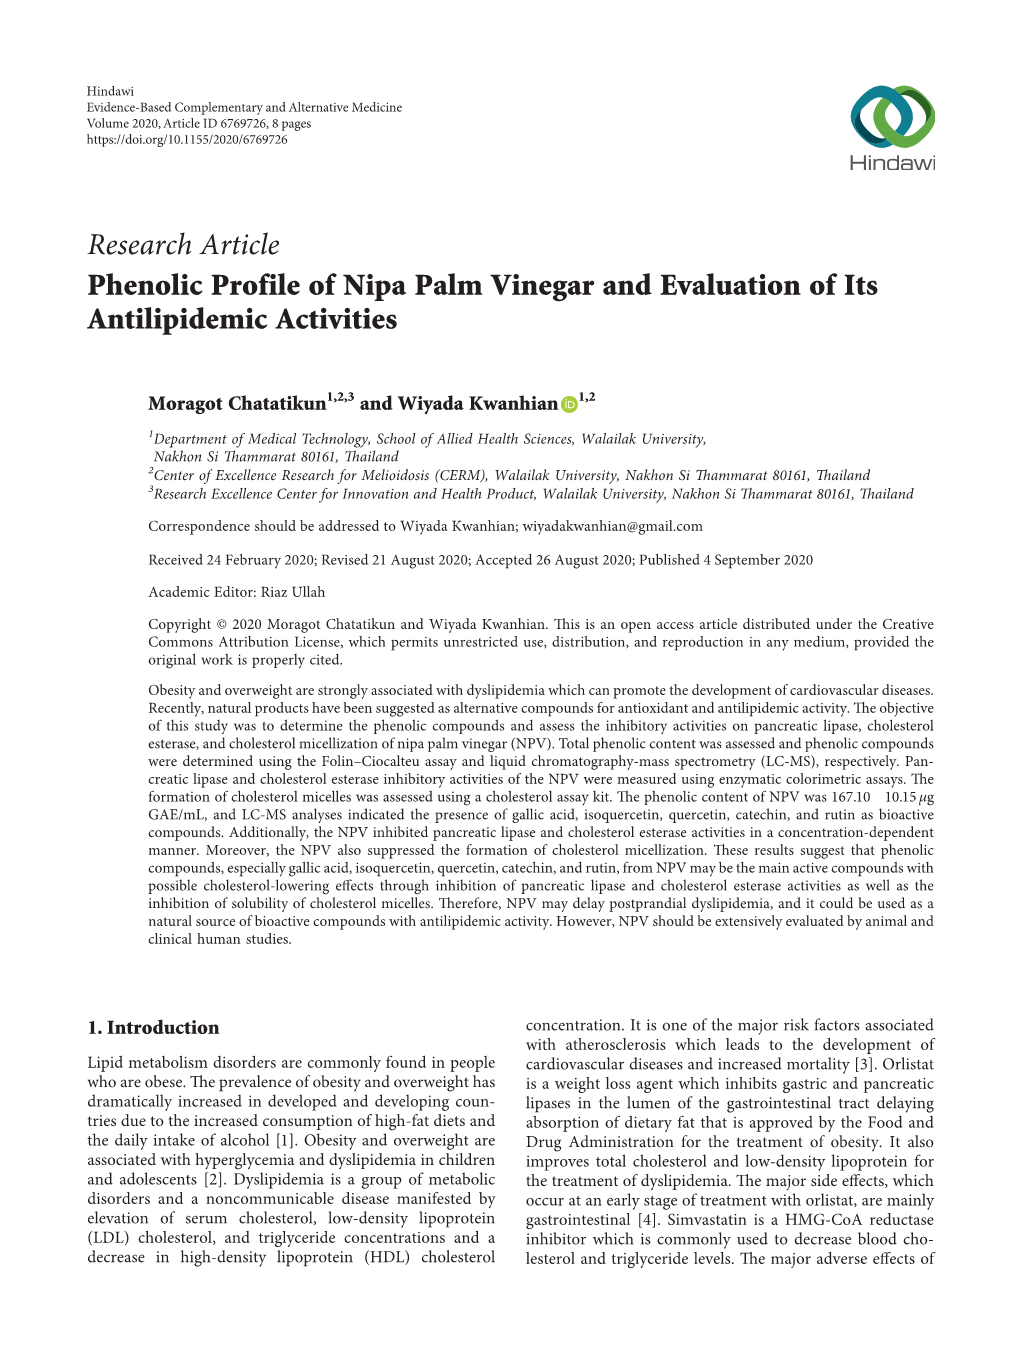 Phenolic Profile of Nipa Palm Vinegar and Evaluation of Its Antilipidemic Activities